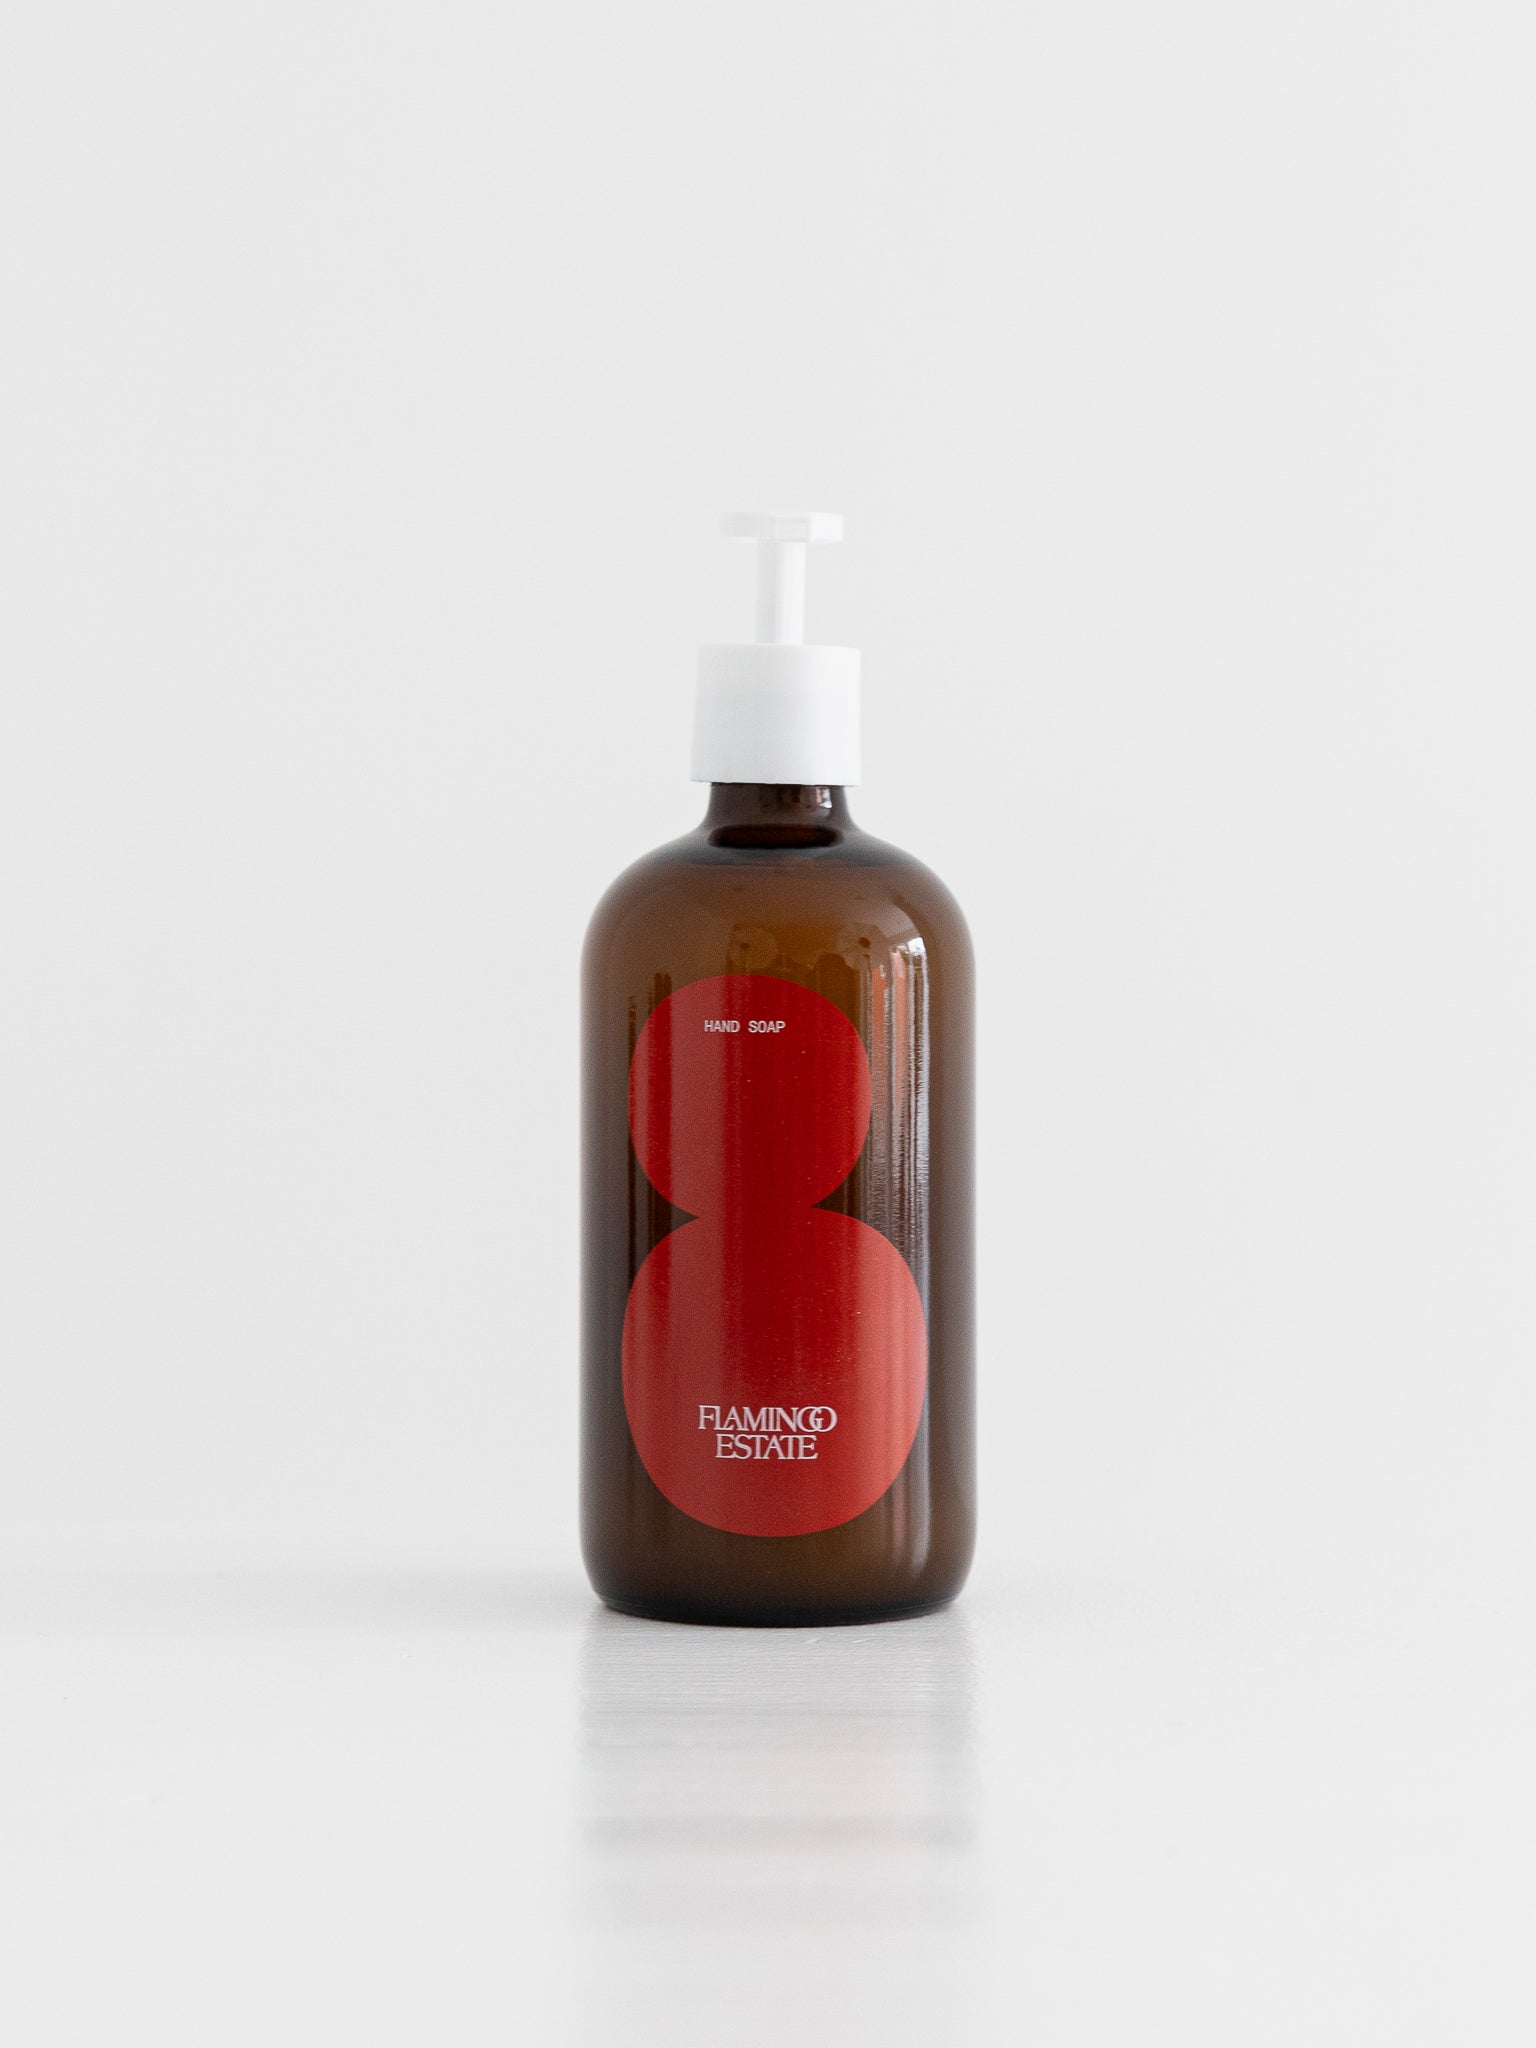 Heirloom Dish Soap in Amber Glass Bottle